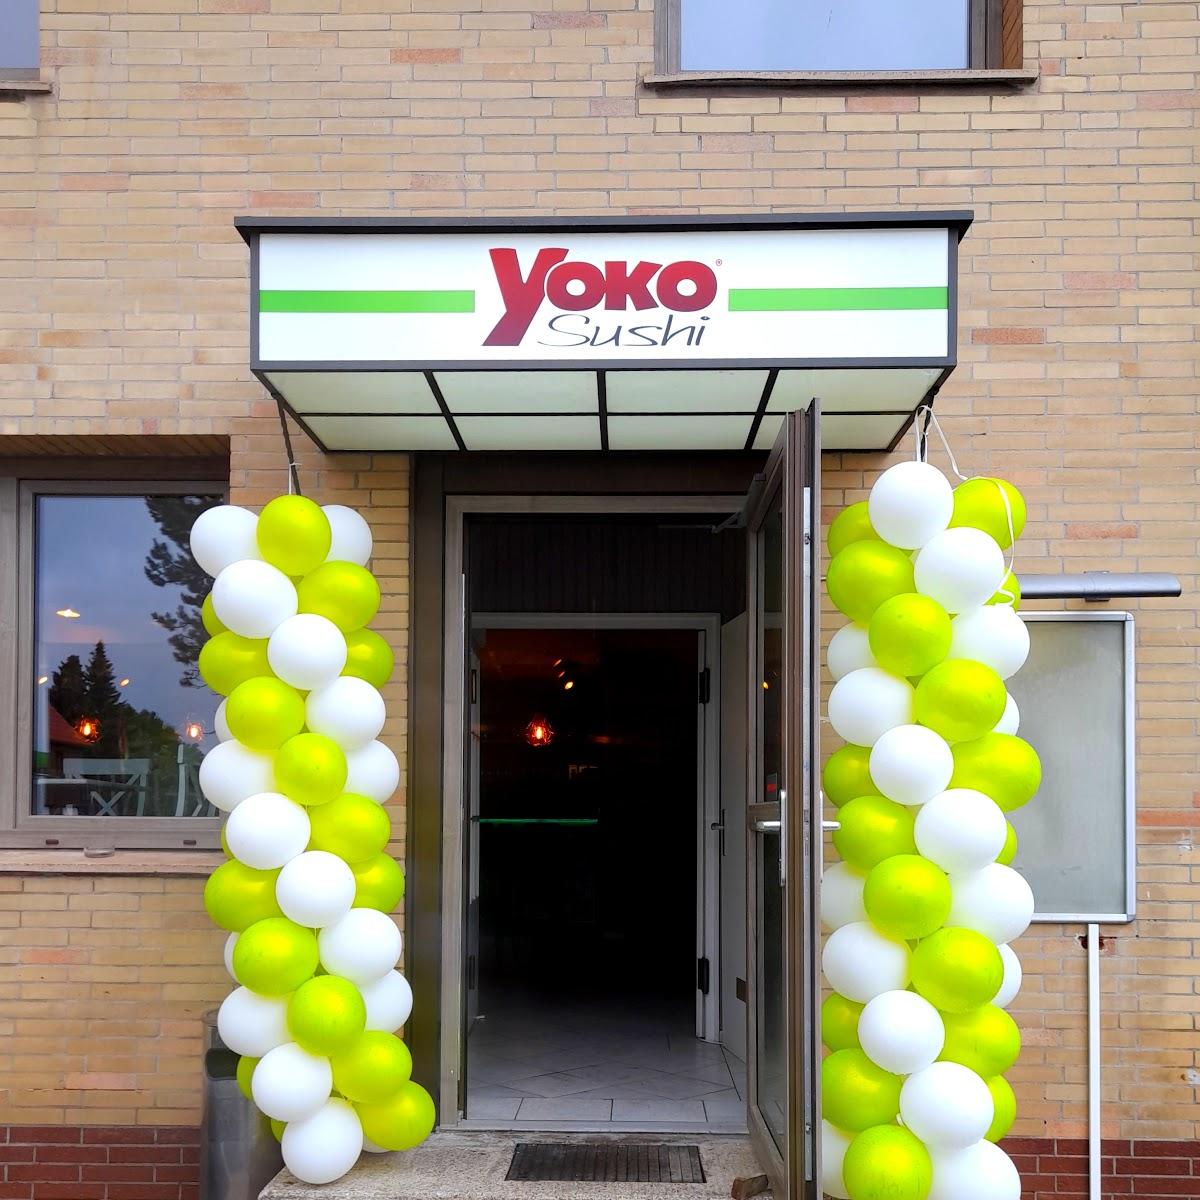 Restaurant "Yoko Sushi Lieferservice  West" in Göttingen